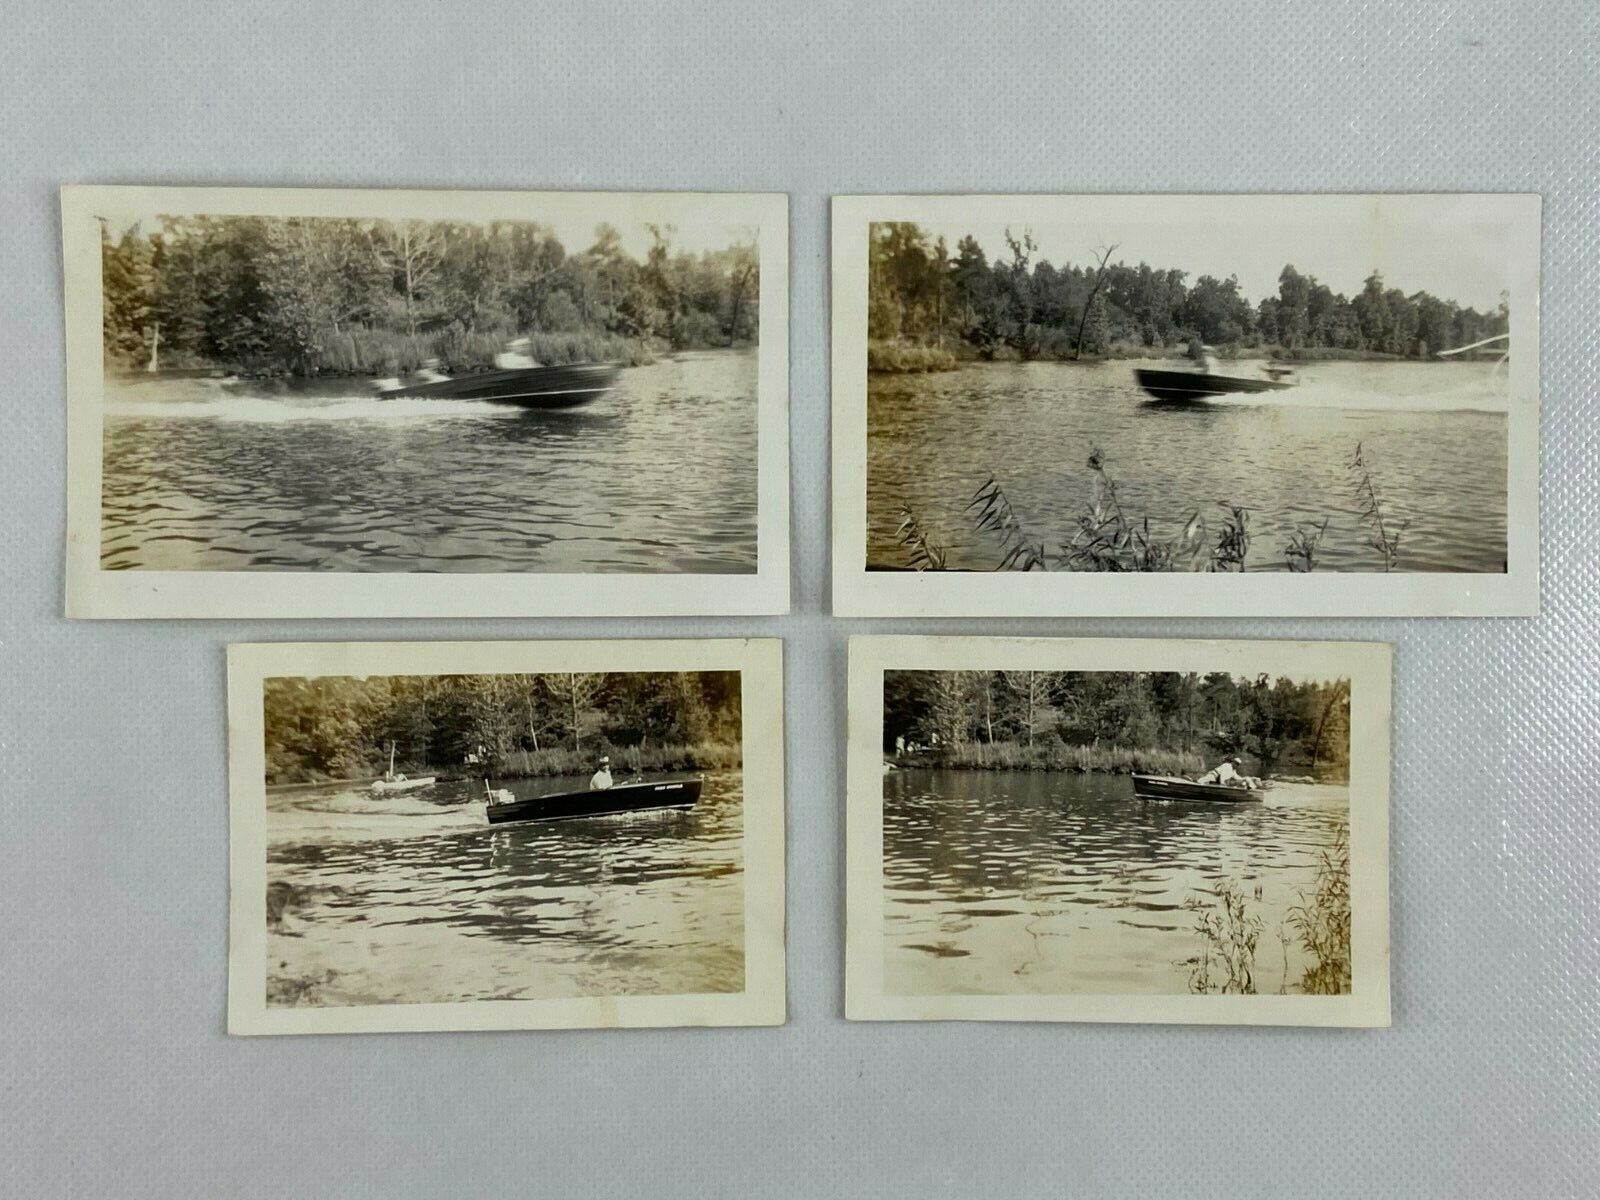 Man Running Boat On Lake Lot Of 4 B&W Photograph Snapshot 2.75 x 4.5